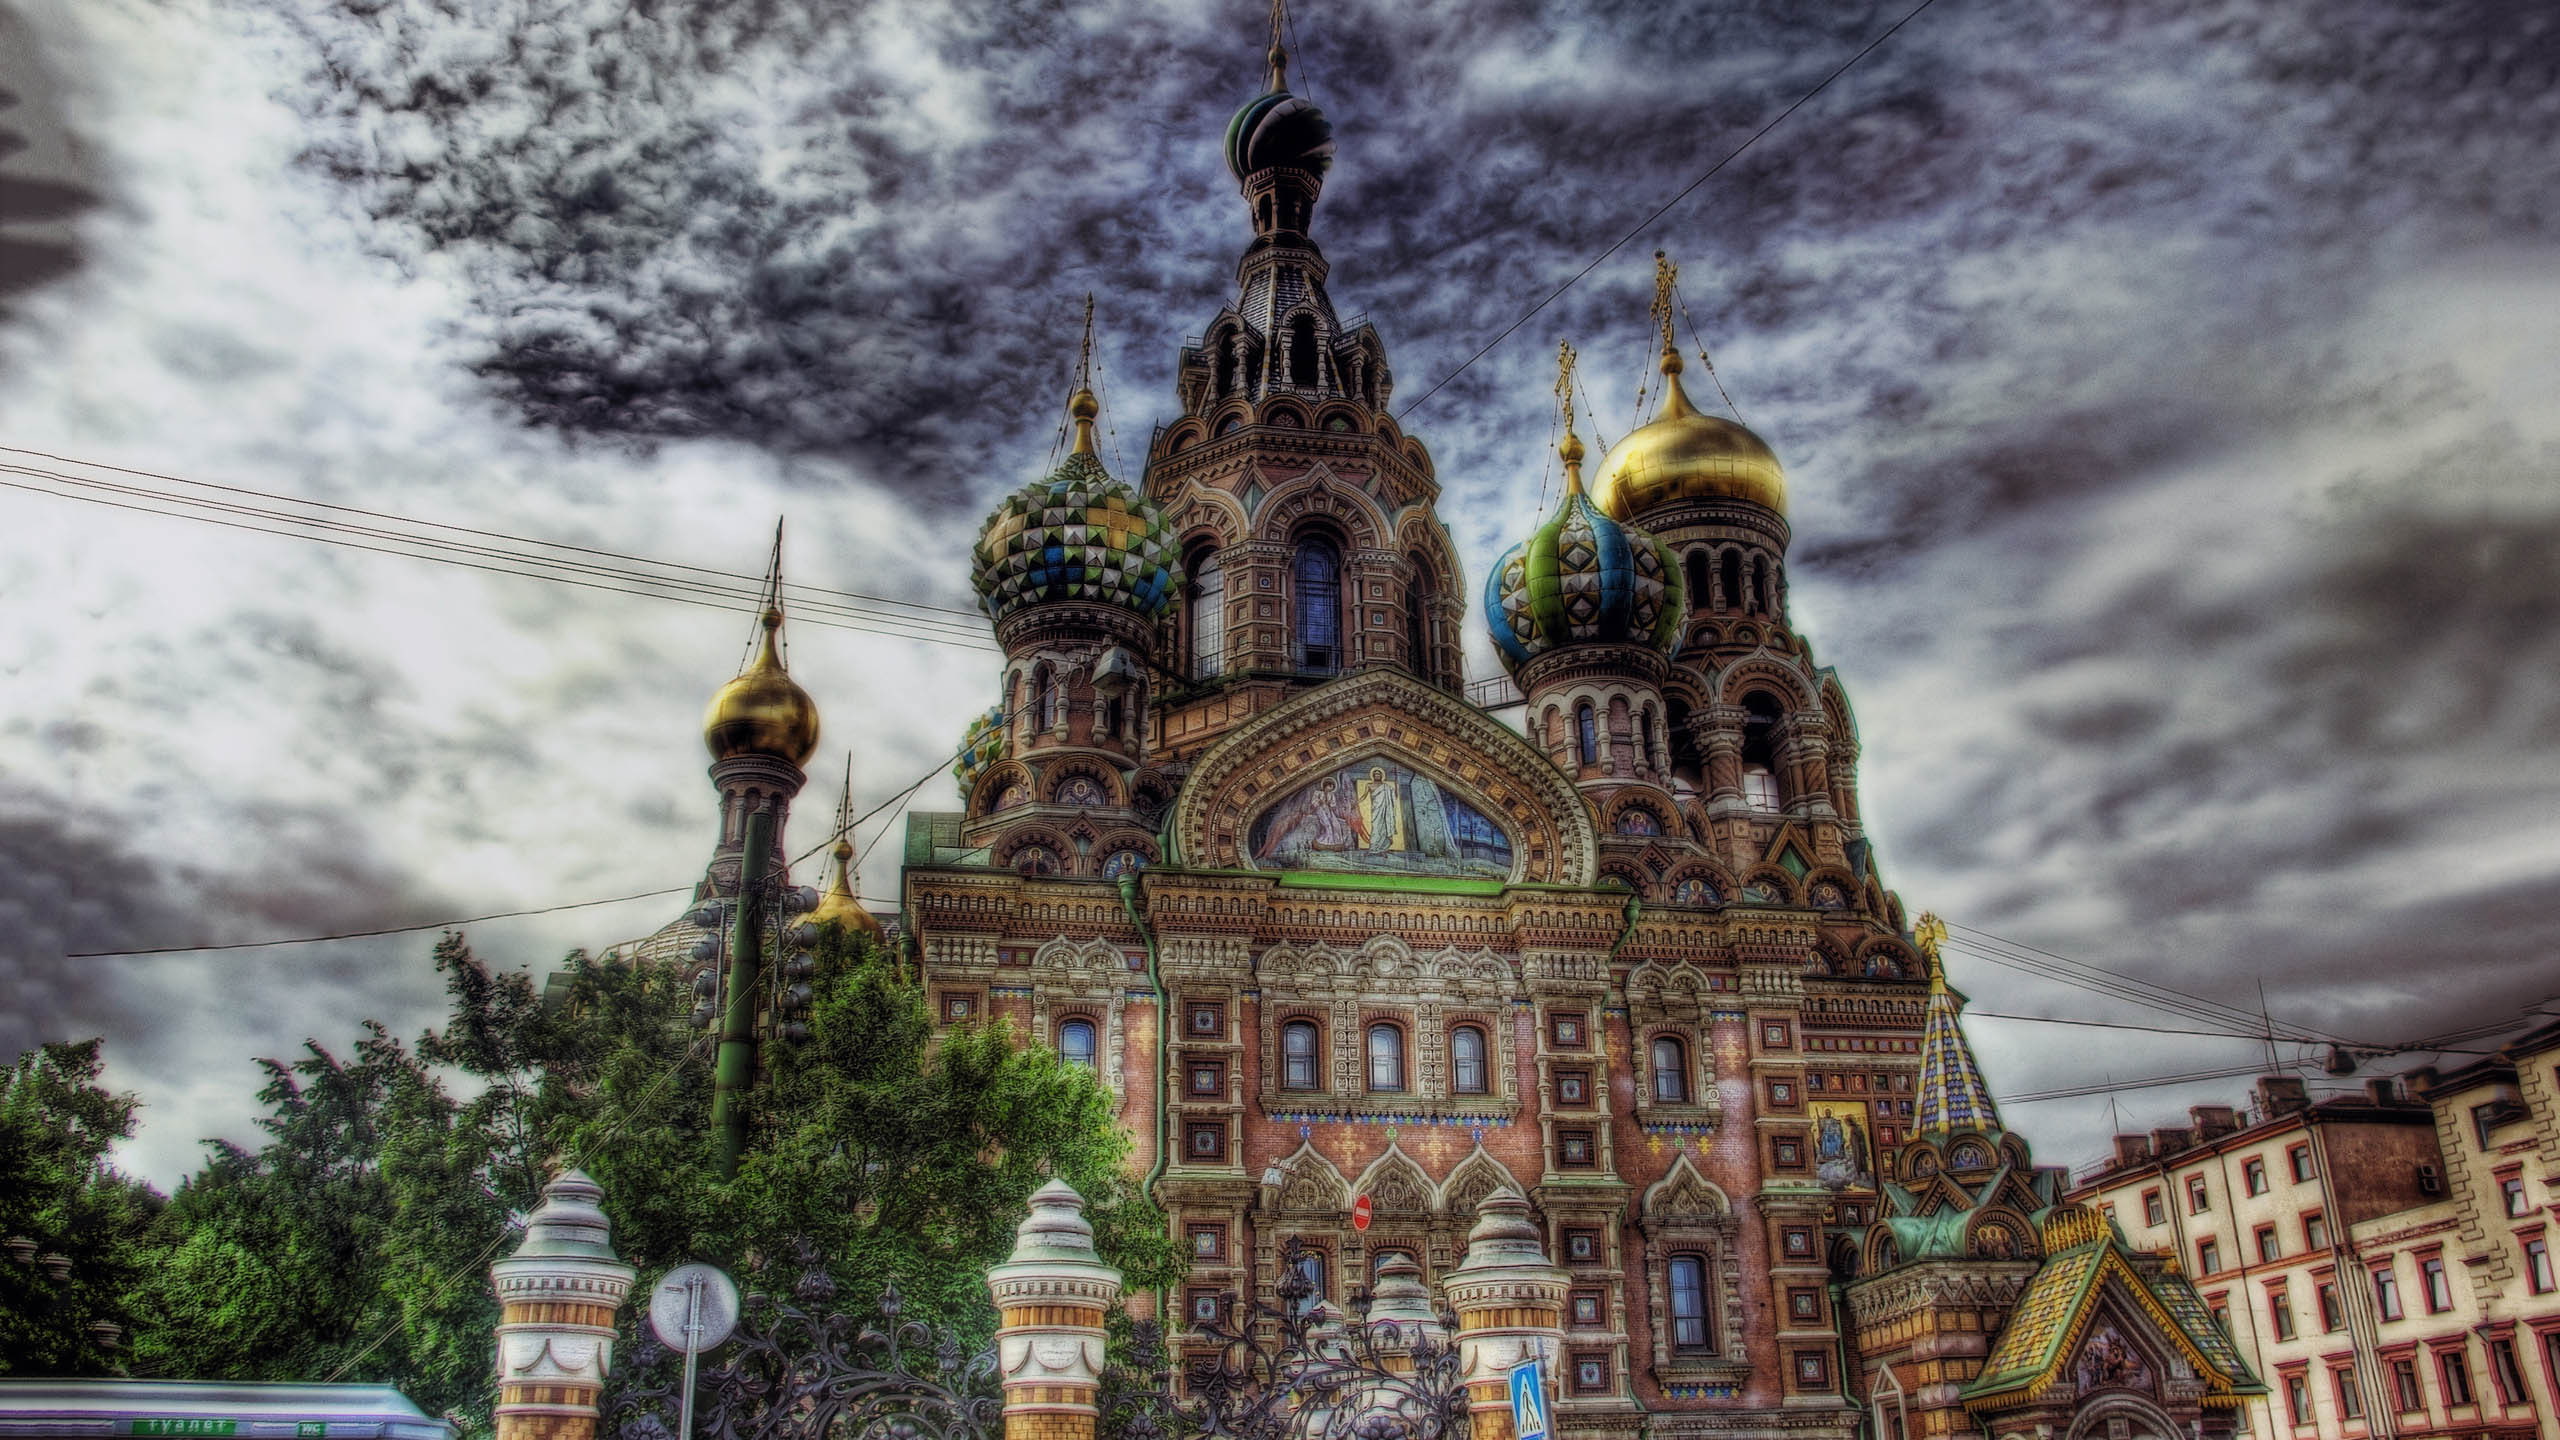 Wallpaper Church Of The Savior On Blood, Russia, Europe, Sky, Cloud 2560×1440